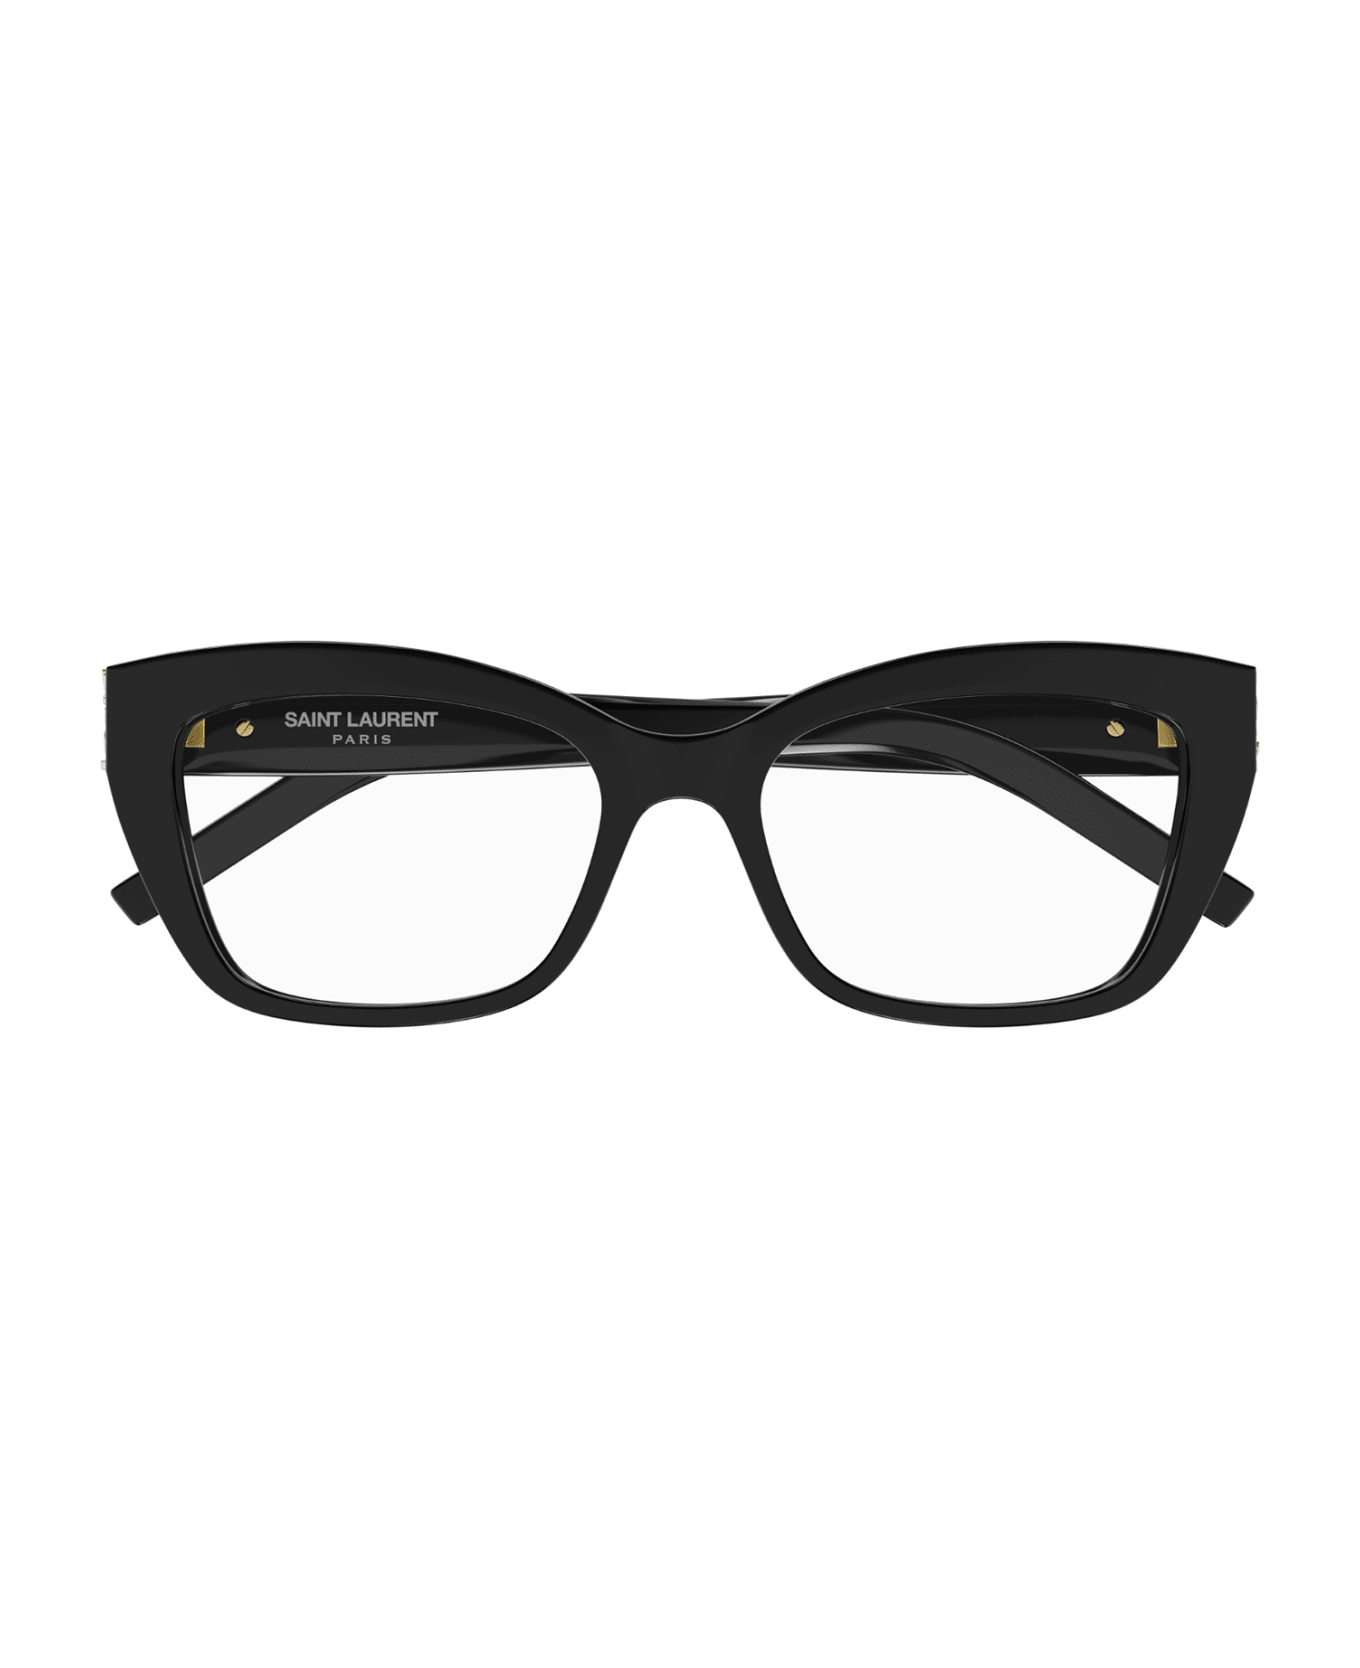 Saint Laurent Eyewear SL M117 Eyewear - Black Black Transpare アイウェア